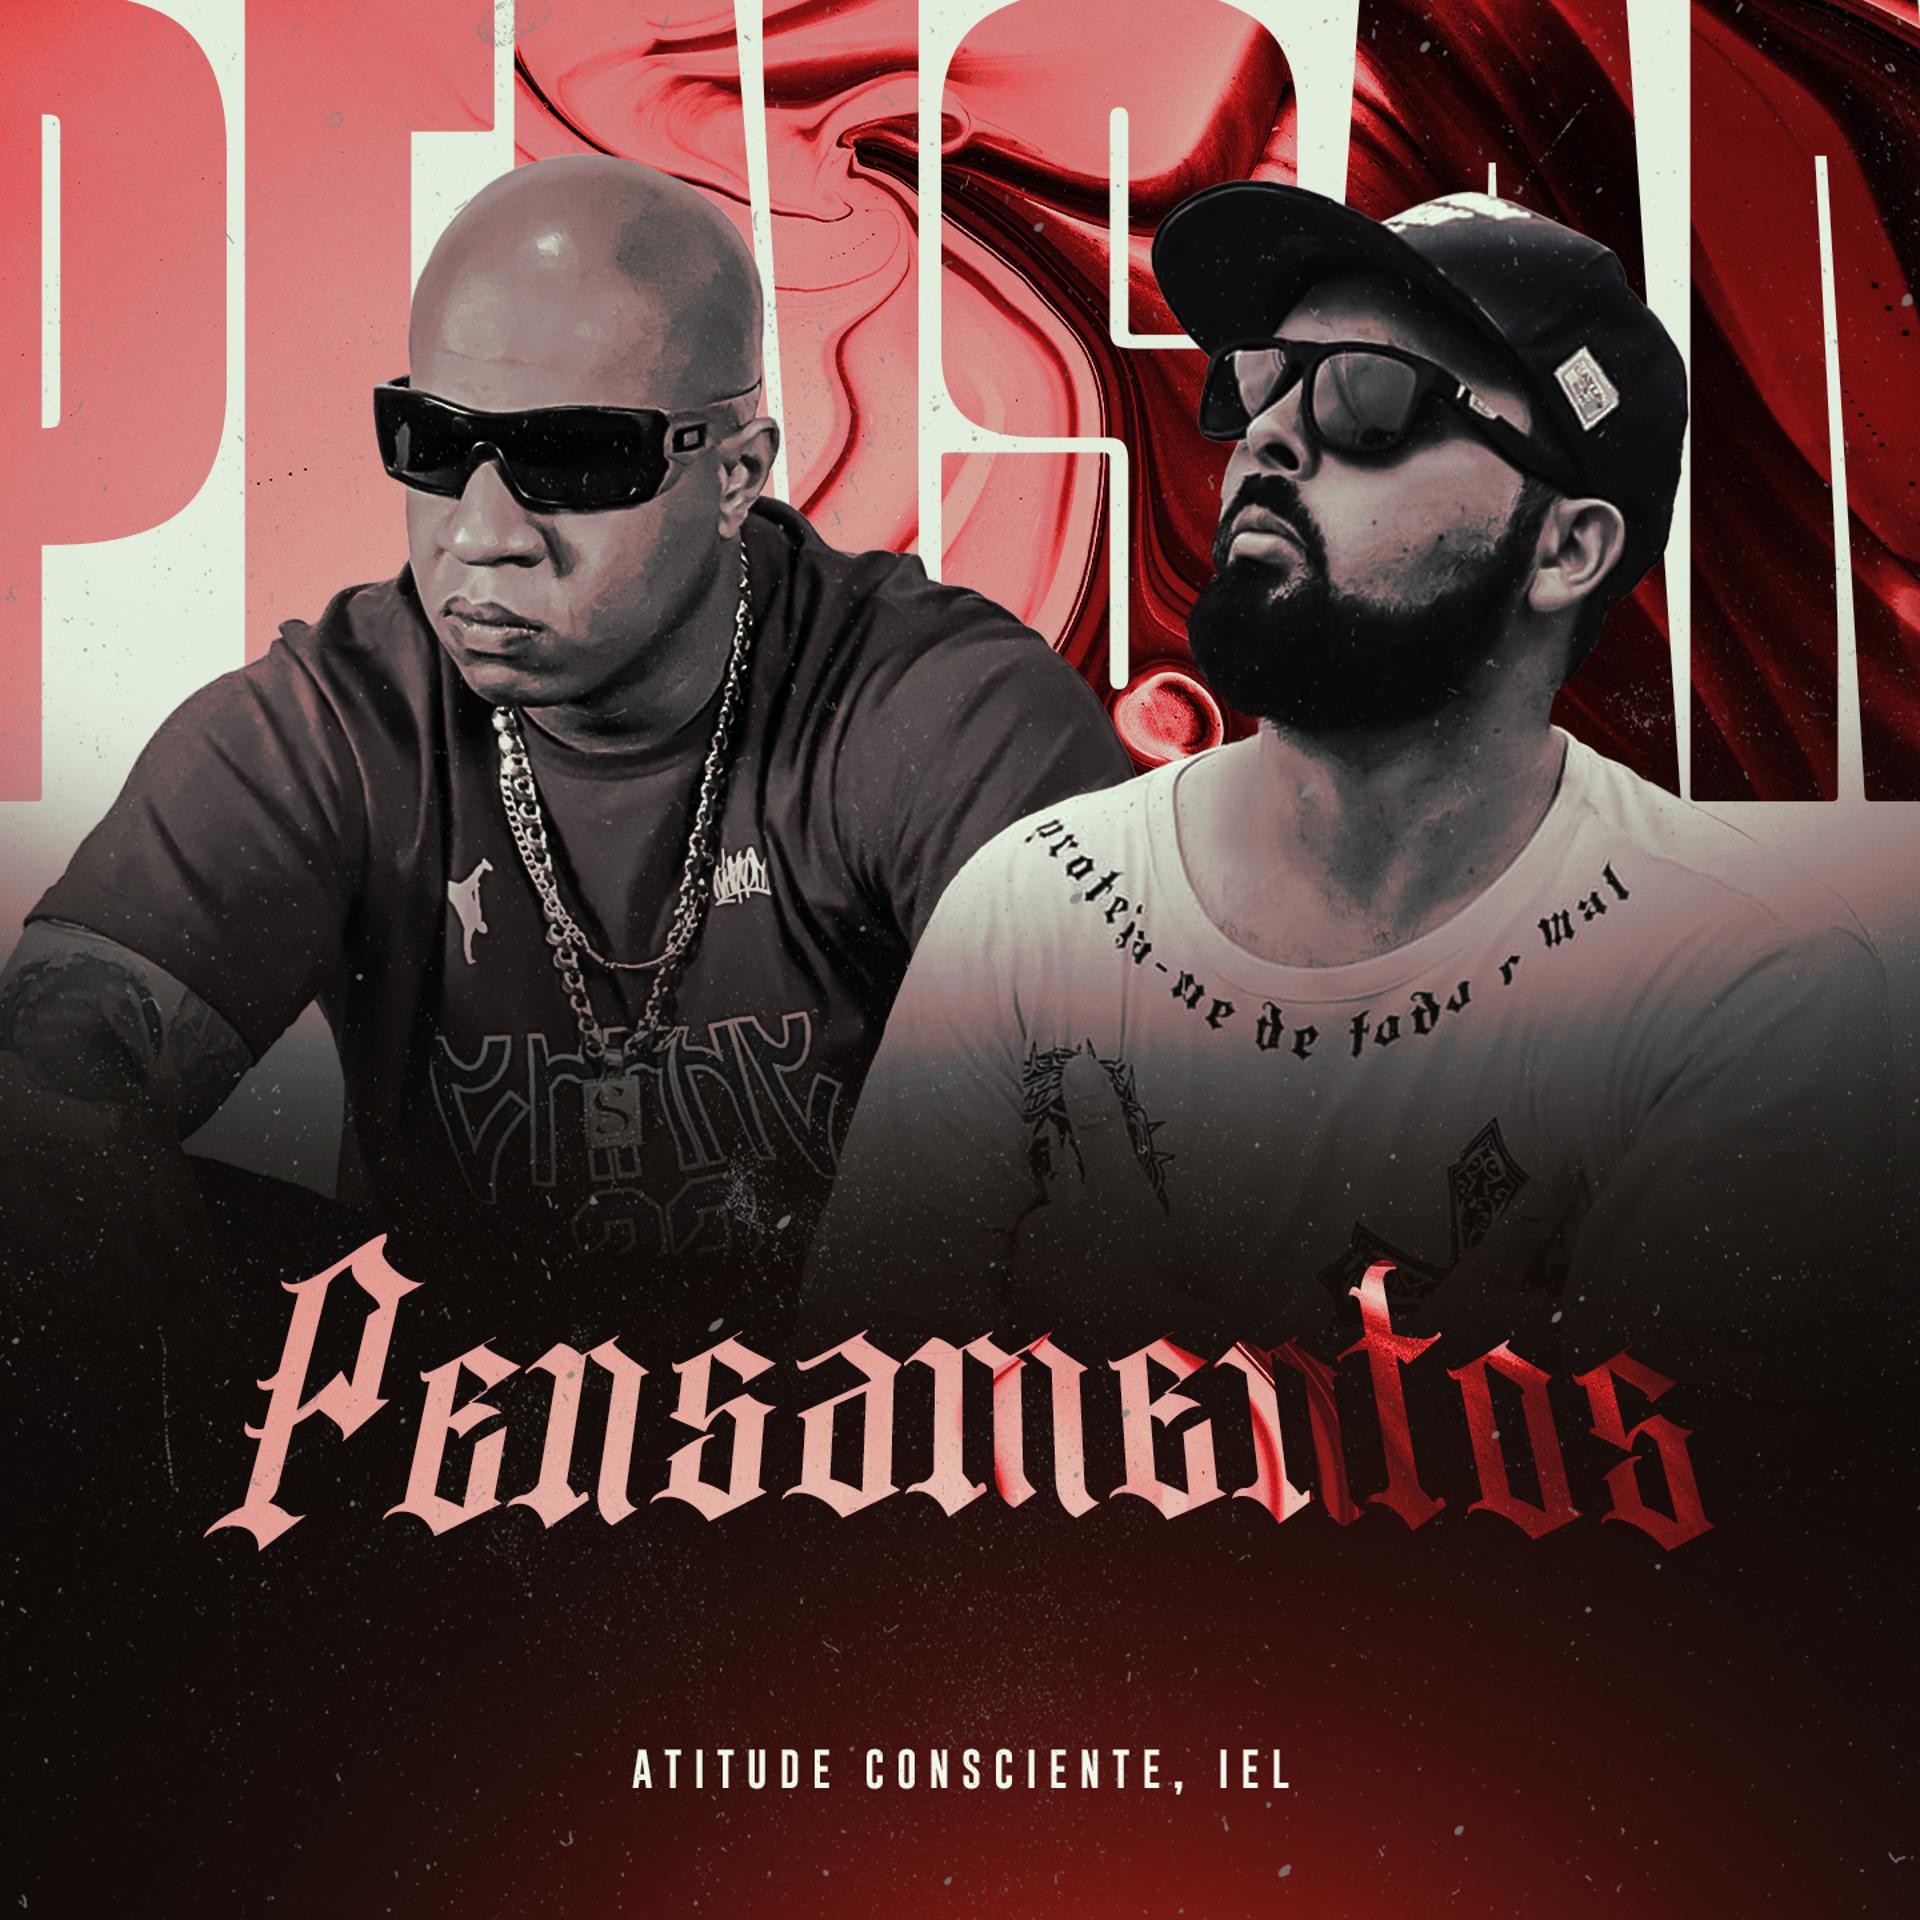 Постер альбома Pensamentos